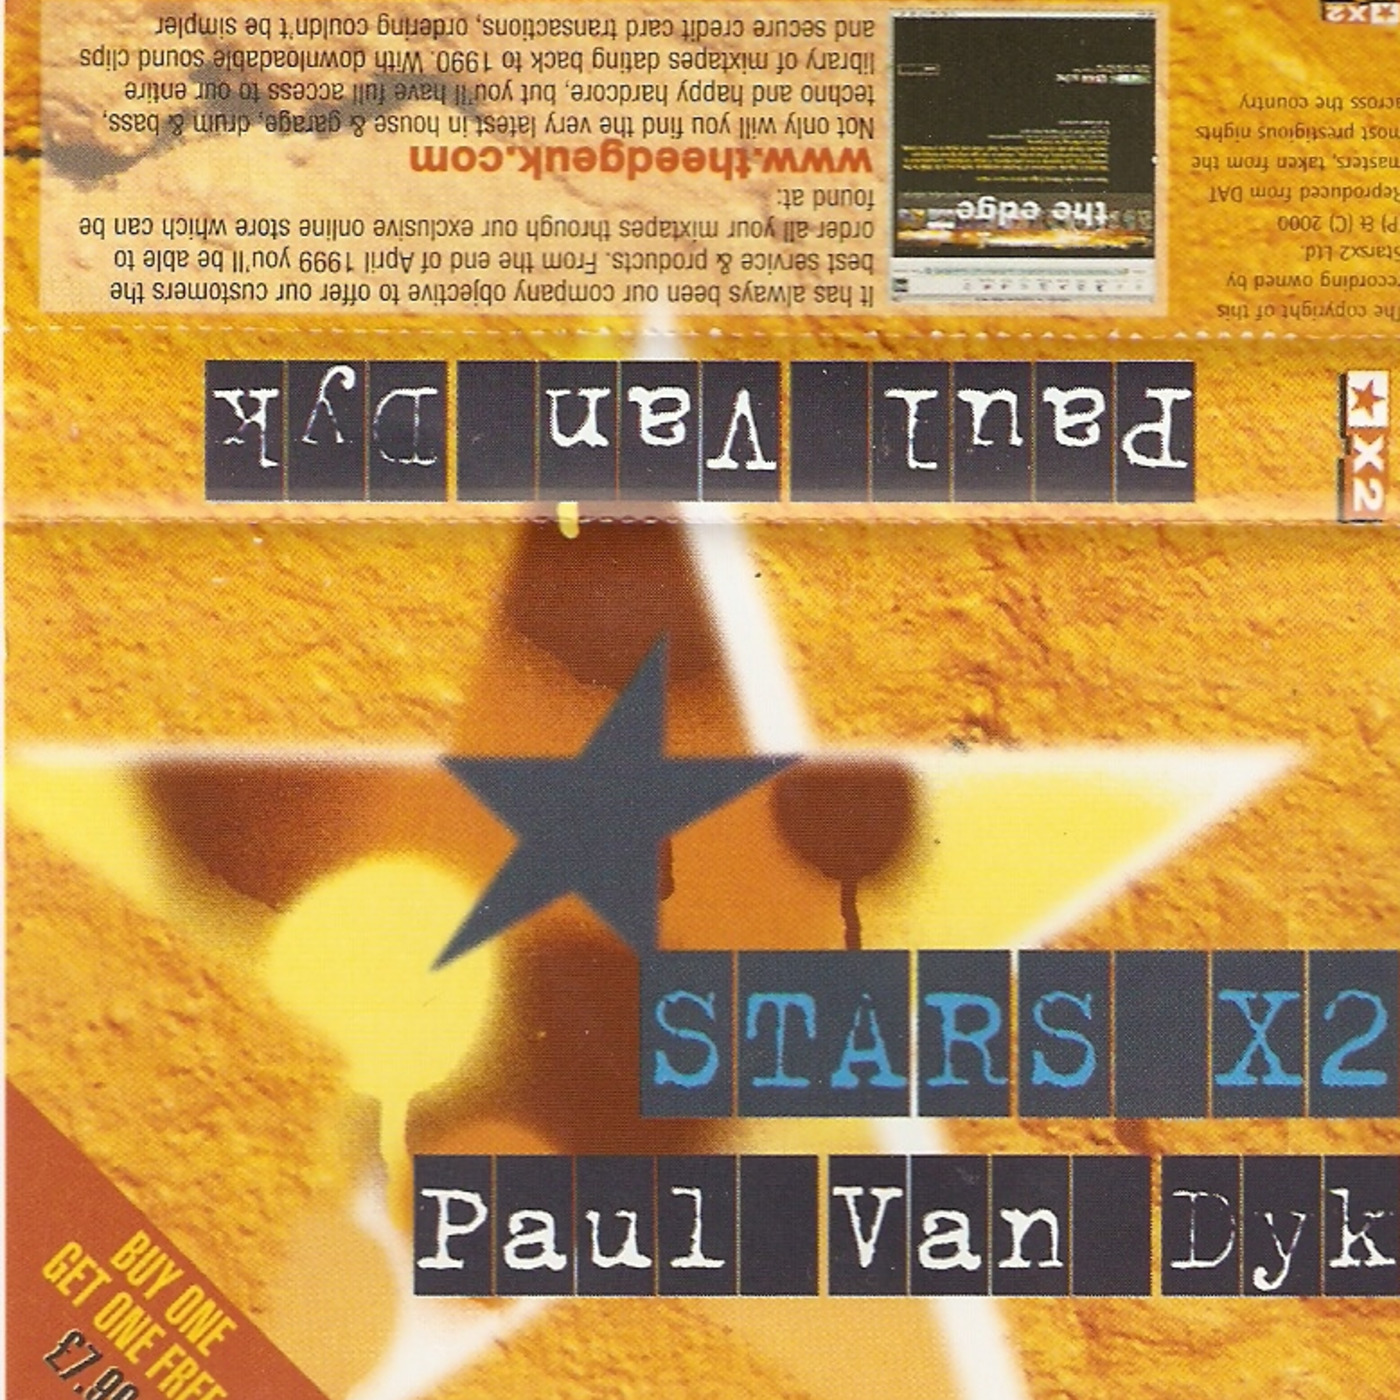 (2000) Paul Van Dyk - Stars X2